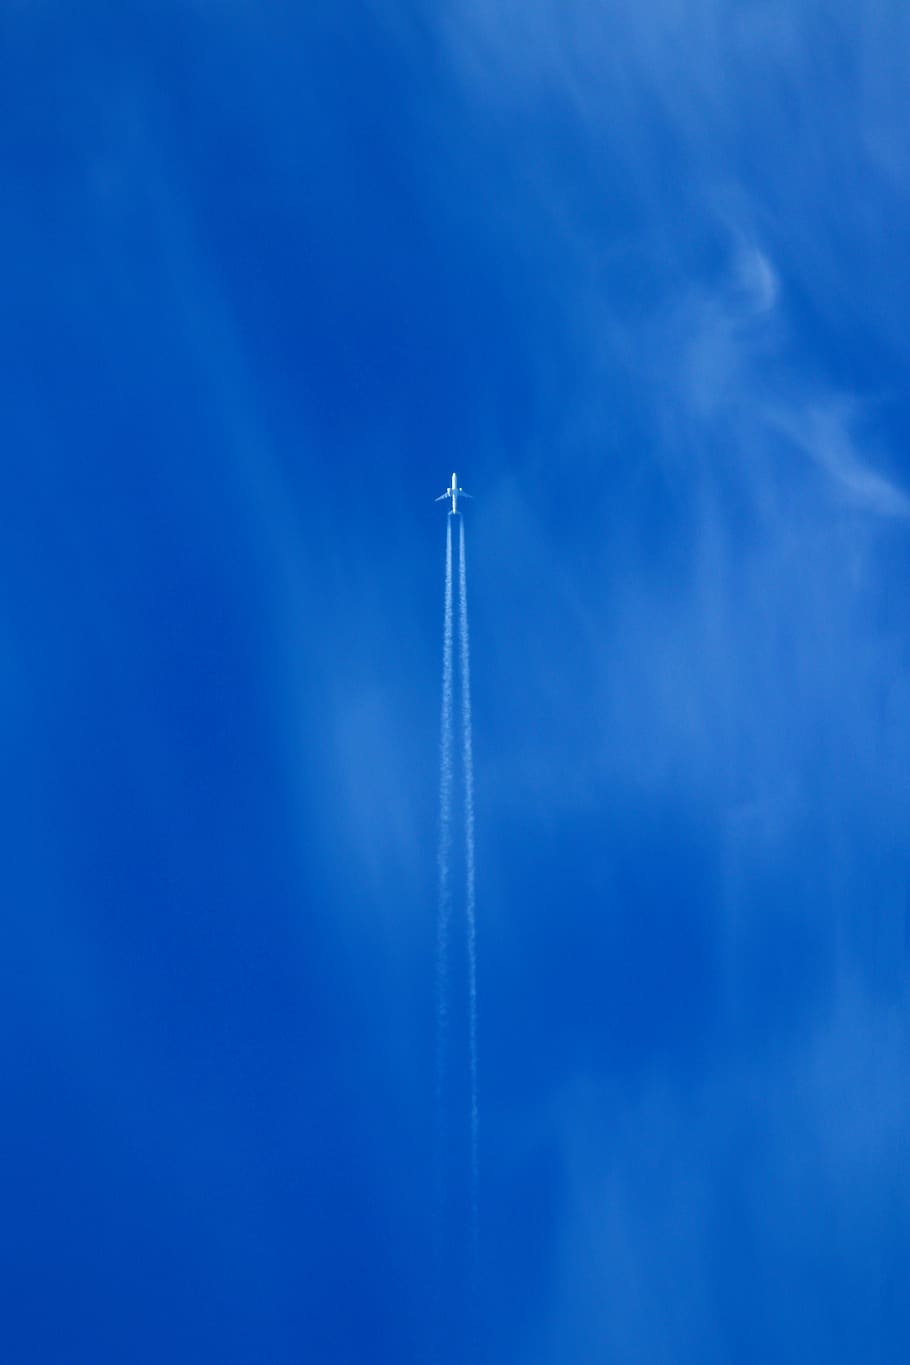 cielo azul, motor a reacción, jet, avión, cielo, militar, viajes, mosca, nube, caza